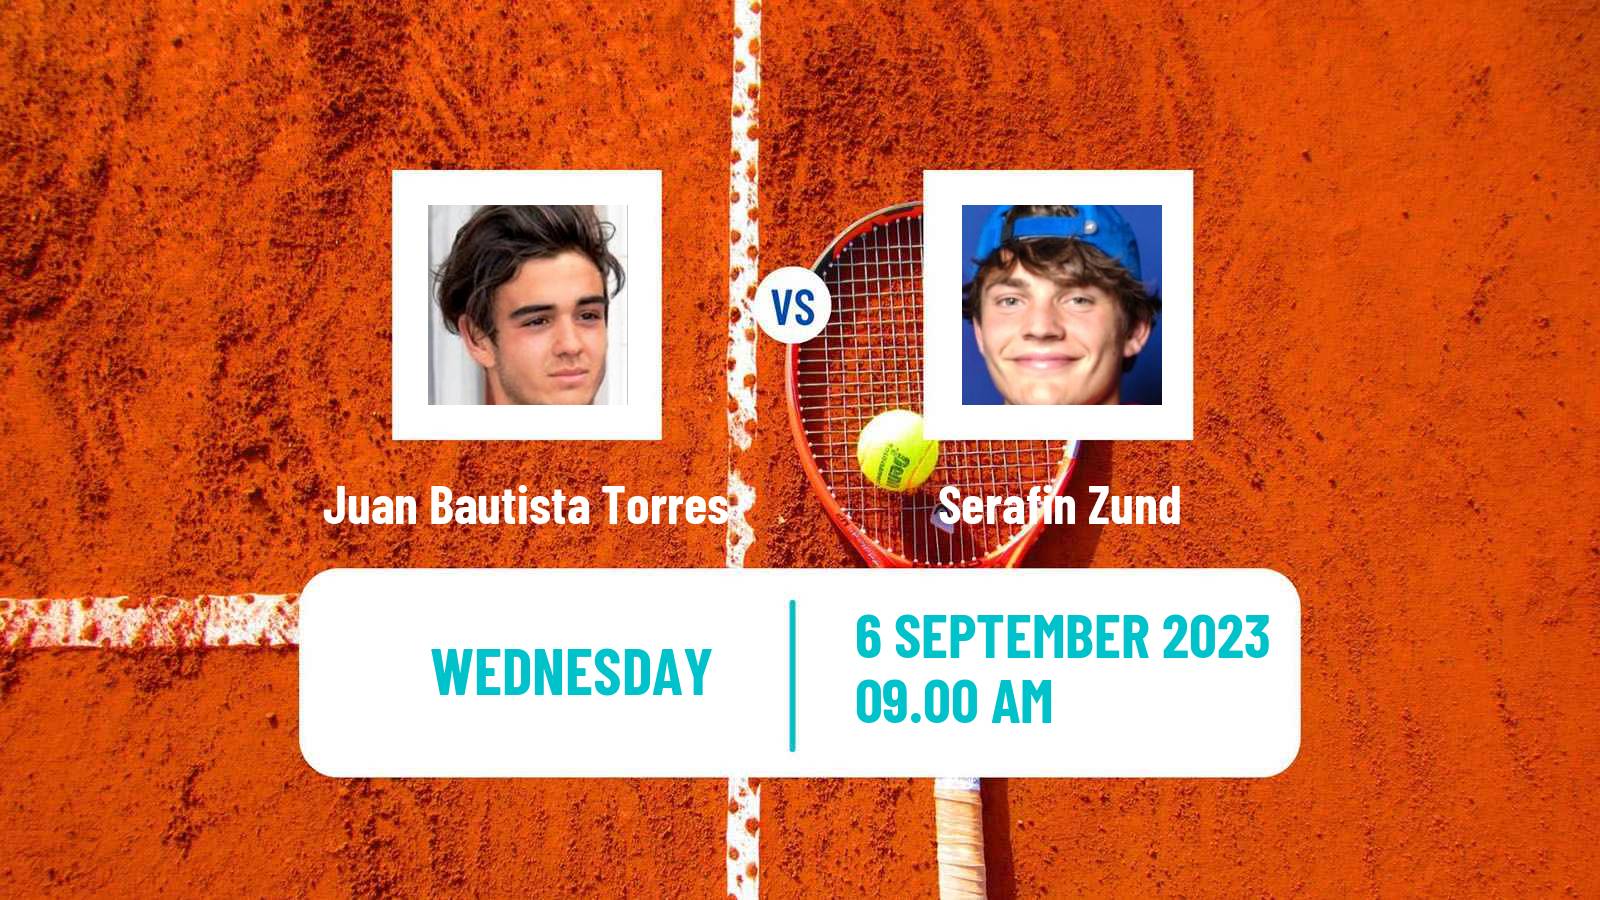 Tennis ITF M25 MarIBOr 2 Men Juan Bautista Torres - Serafin Zund